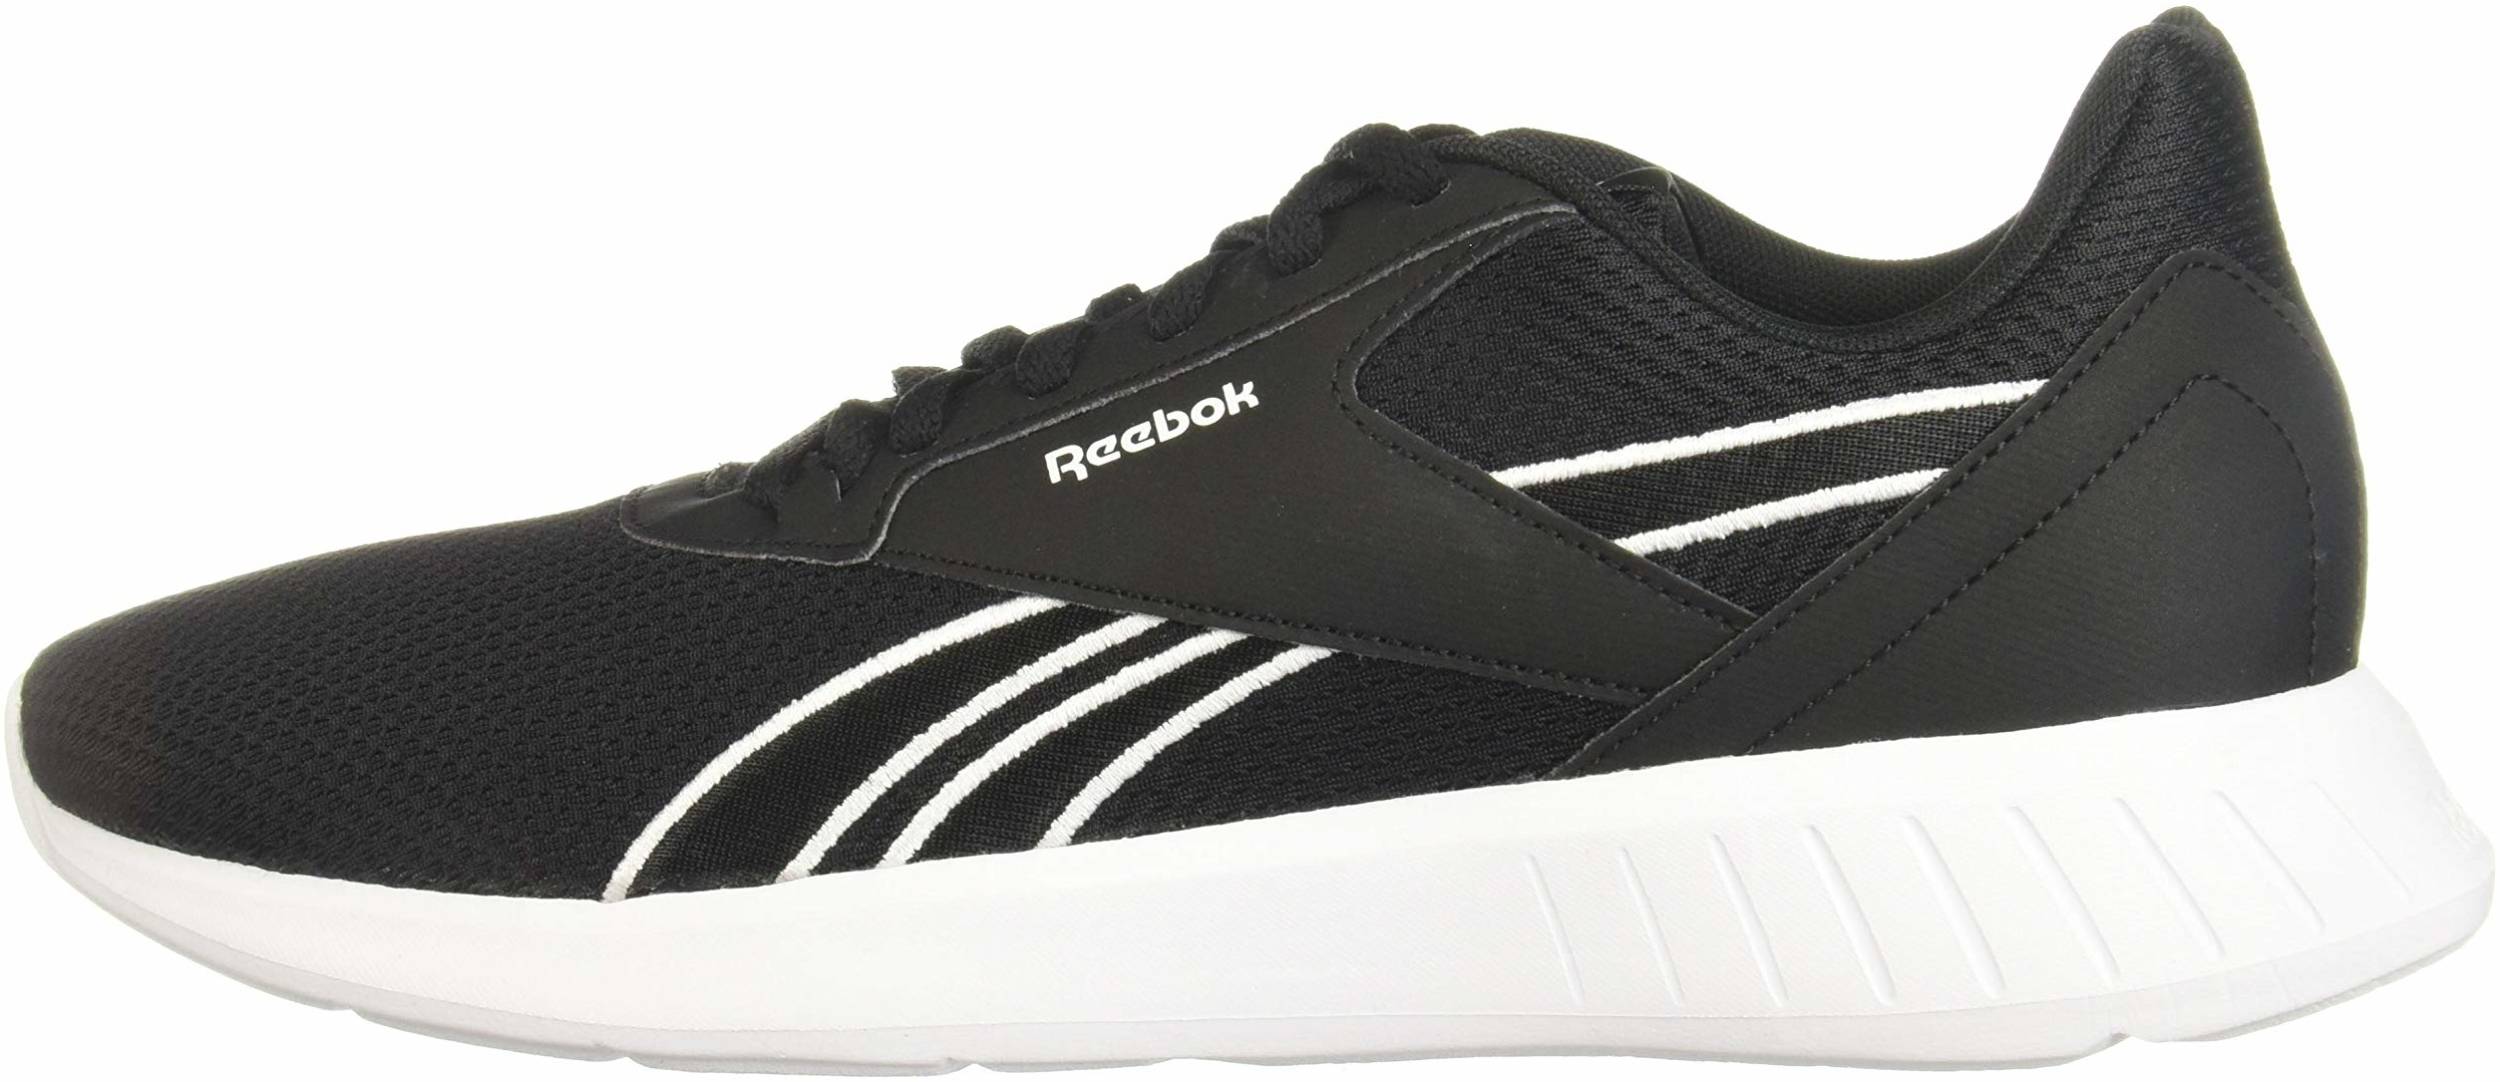 reebok shoes 2.0